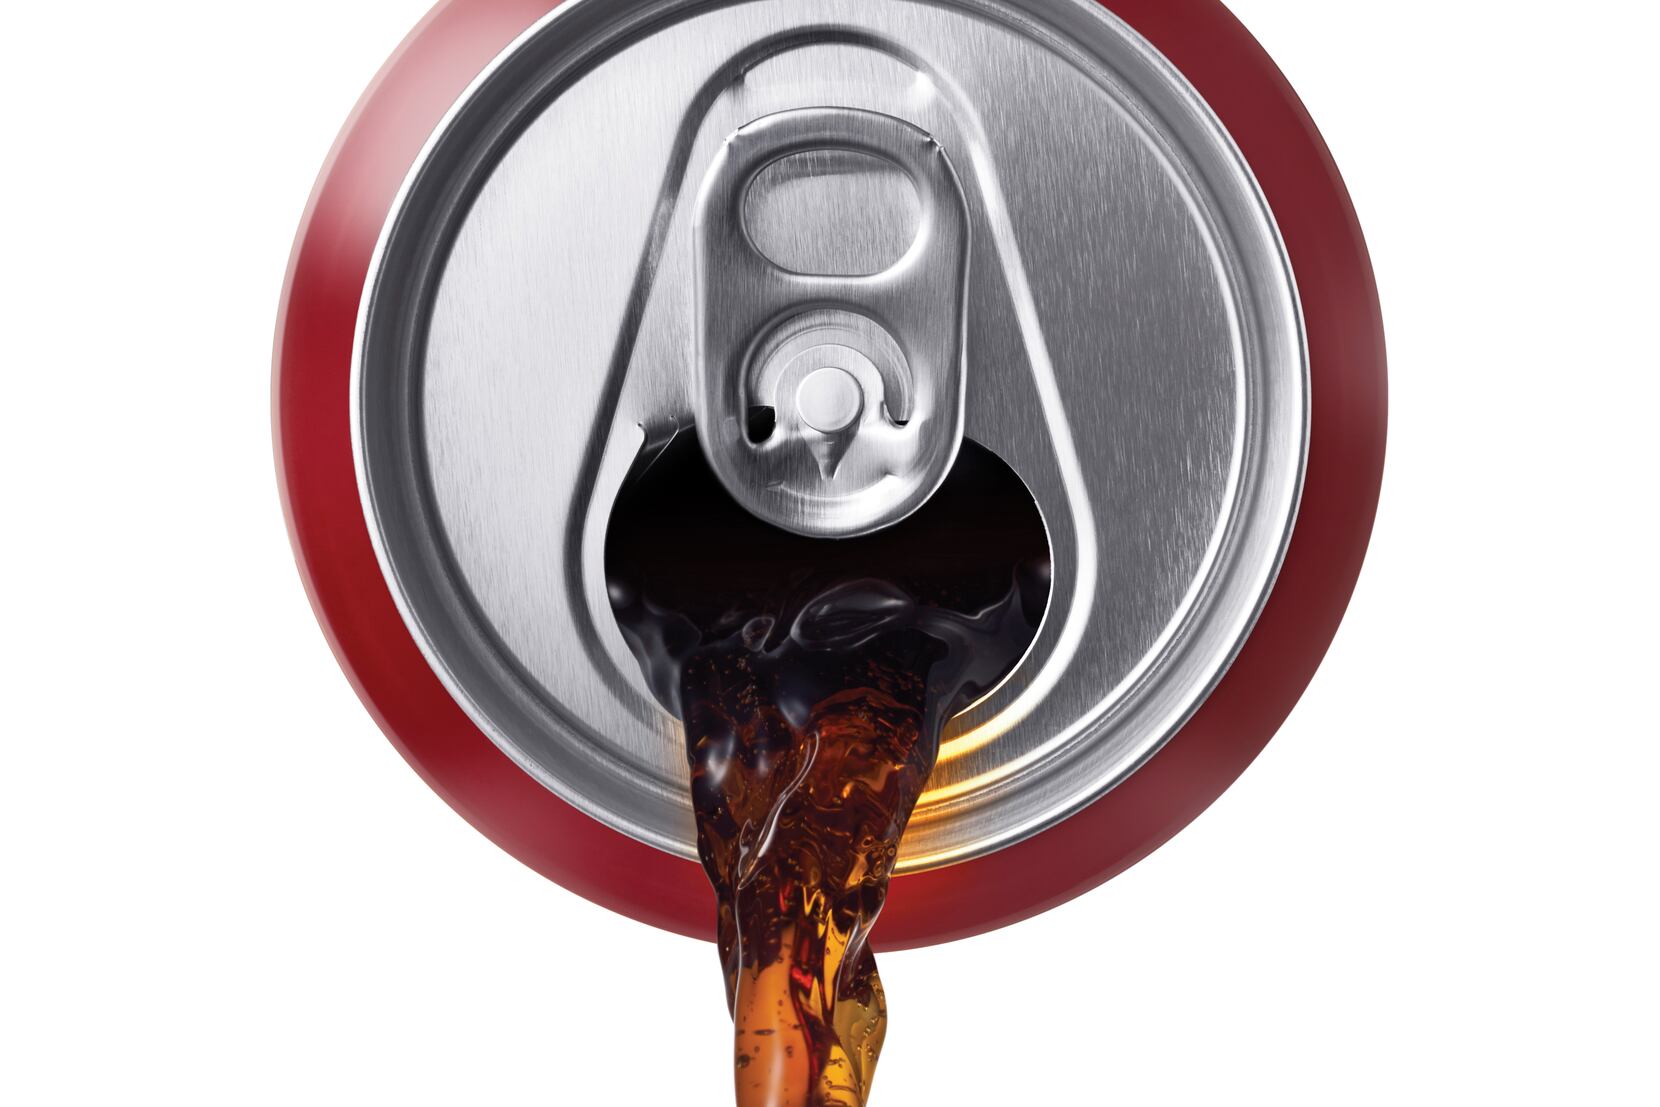 Soda Brands Flood the Energy Drink Market